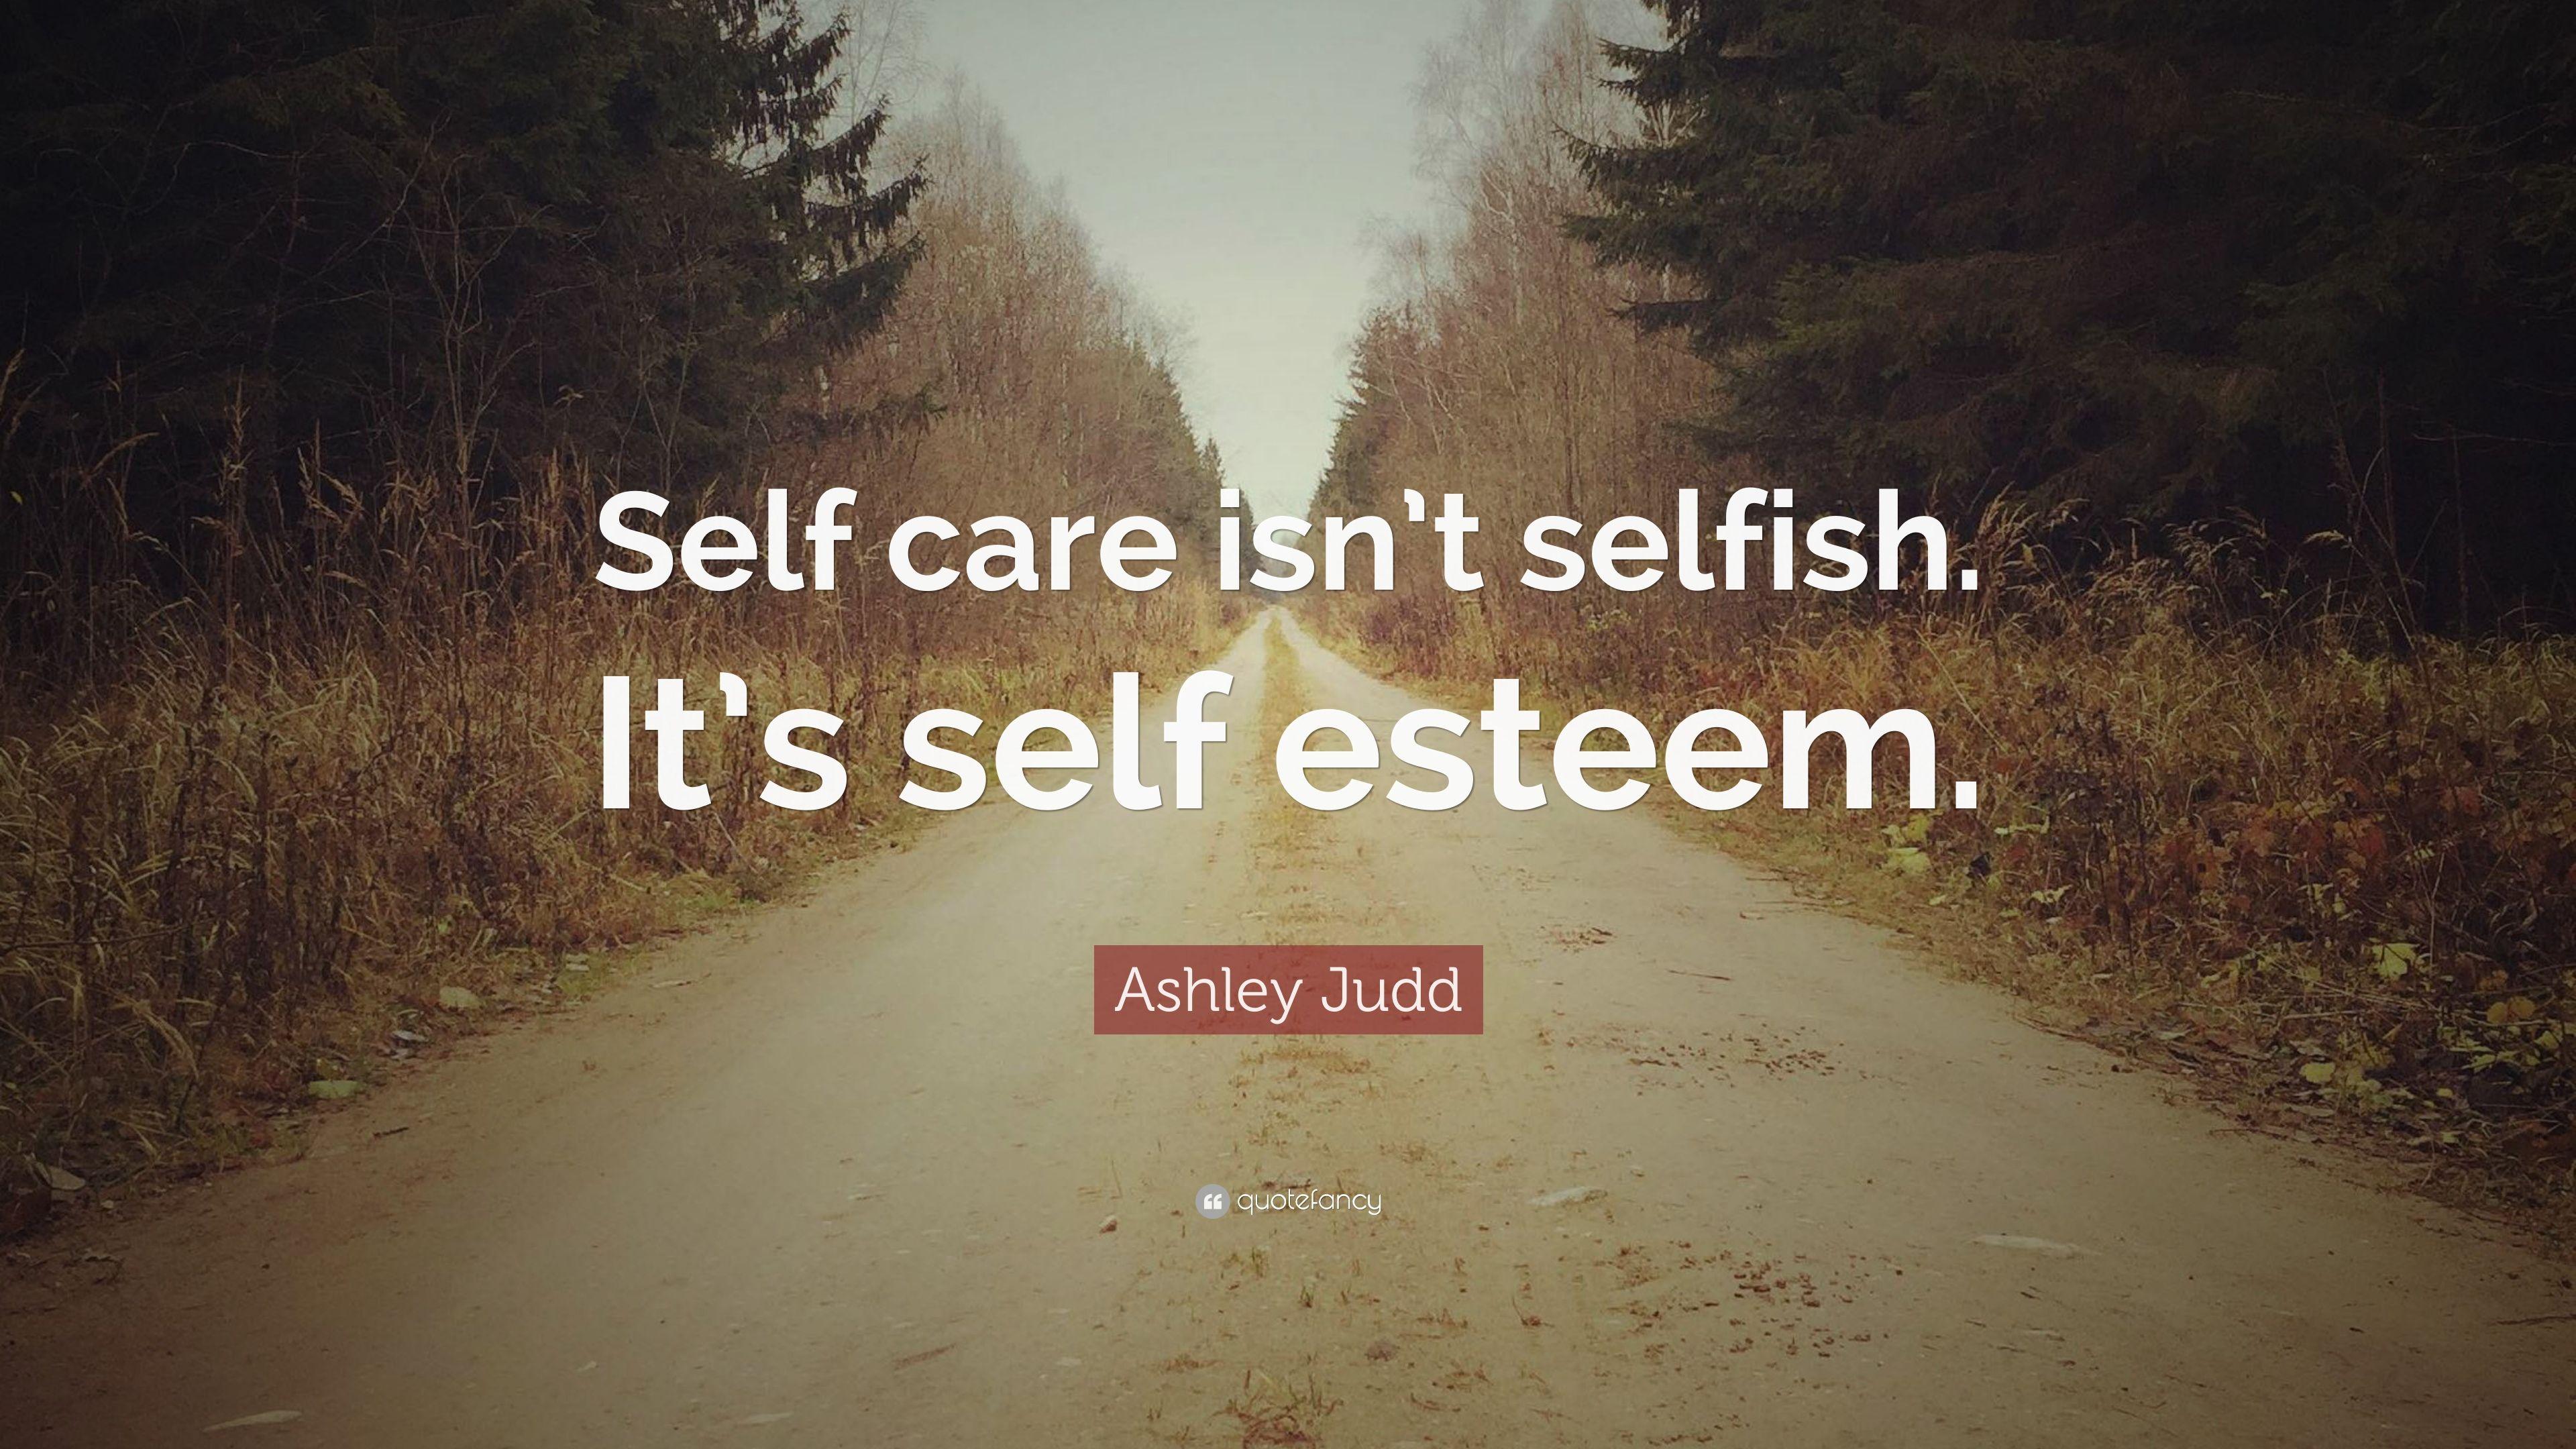 Ashley Judd Quote: “Self care isn't selfish. It's self esteem